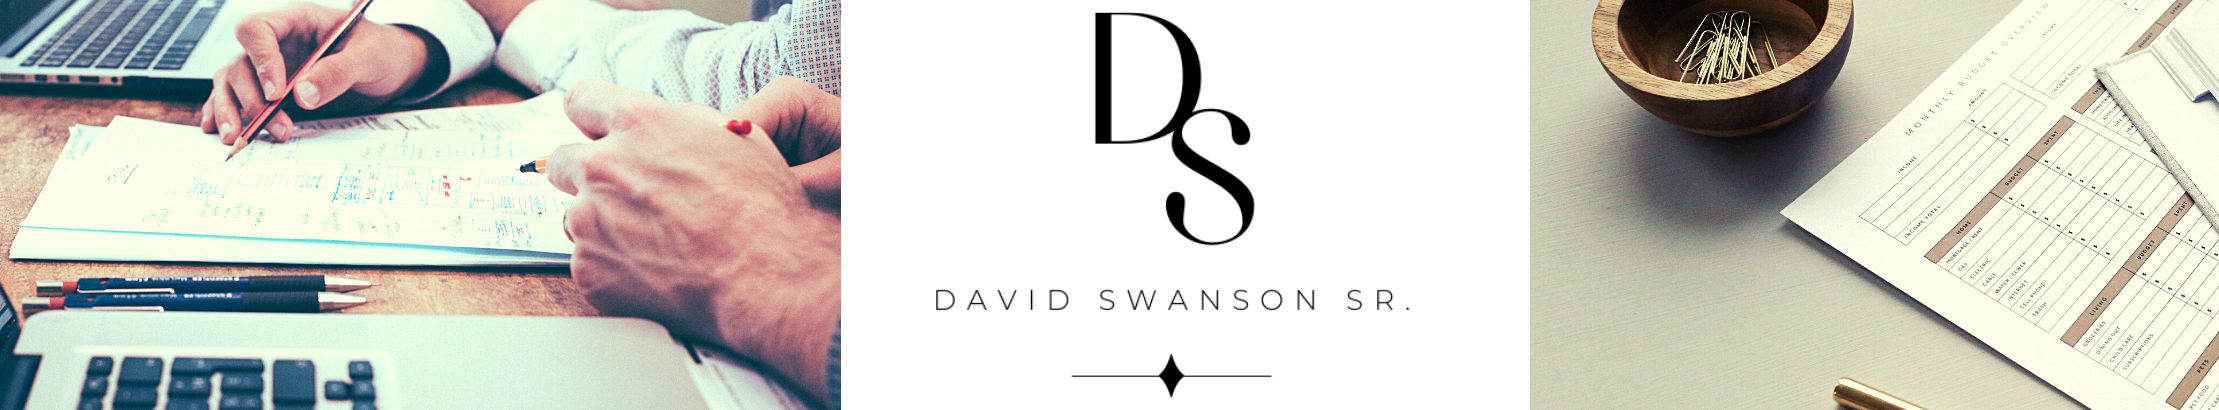 David Swanson Sr.'s profile banner